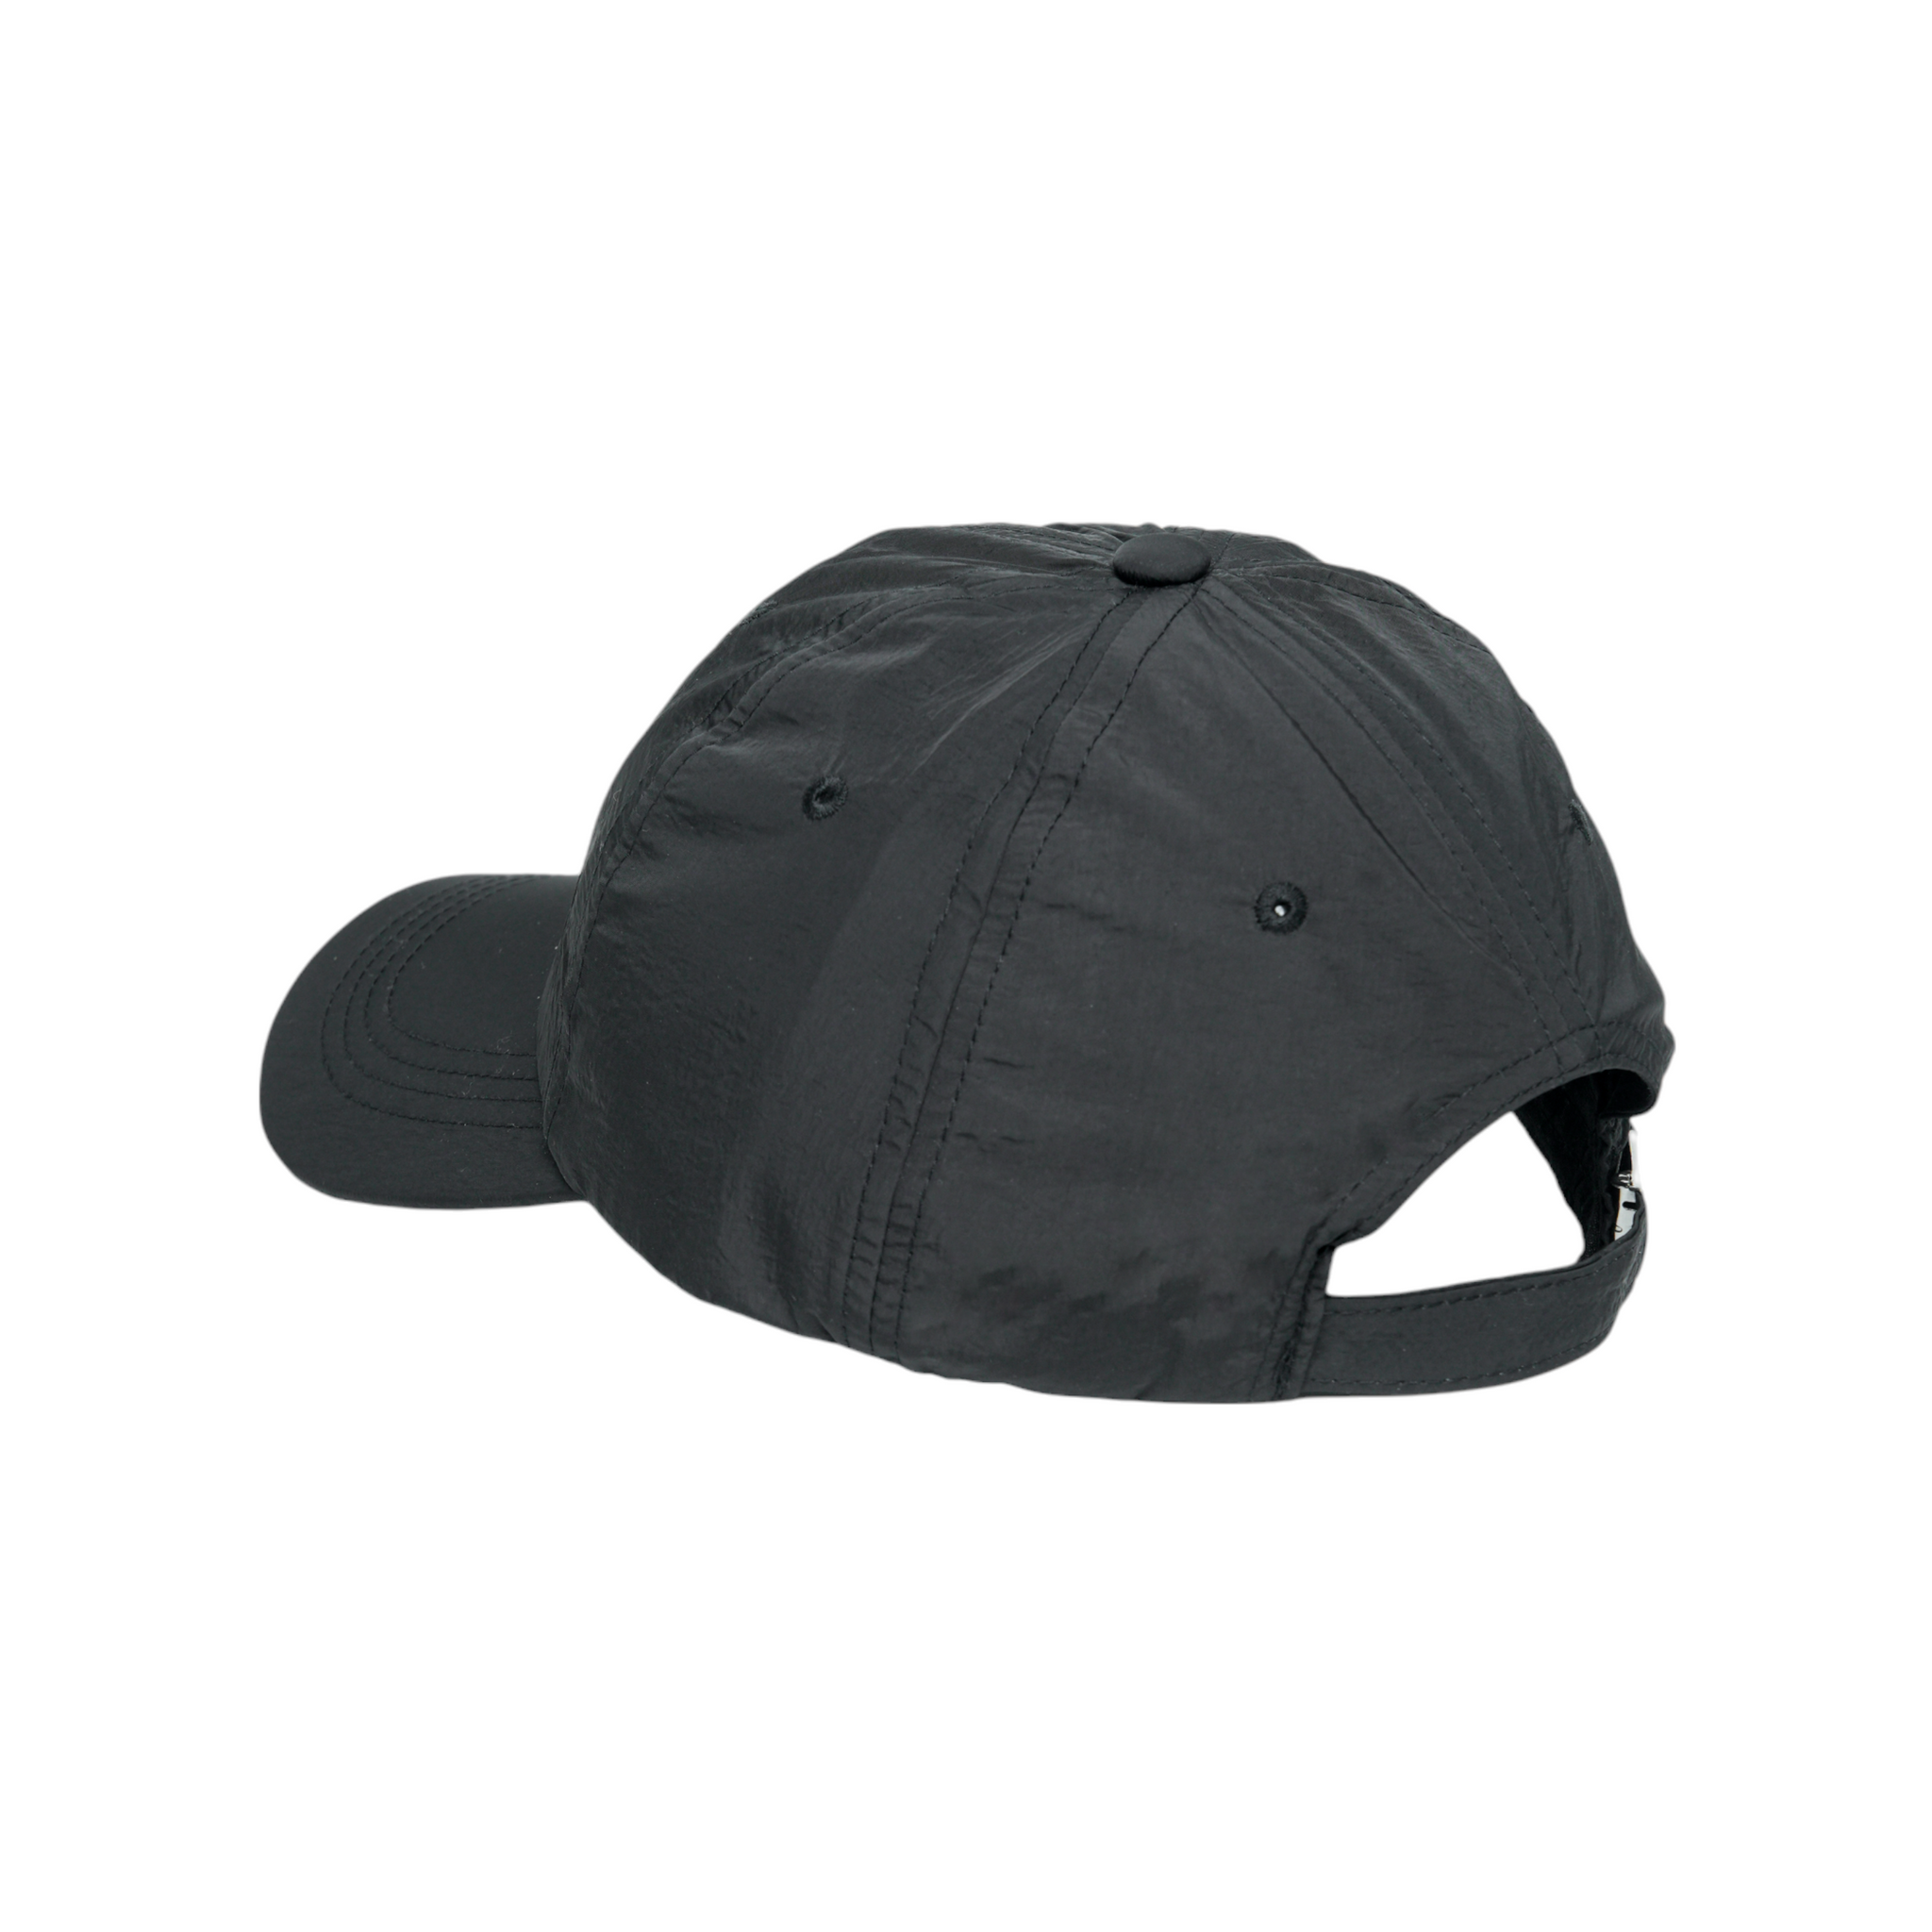 Chokore Three-Leaf Clover Baseball Cap (Black)